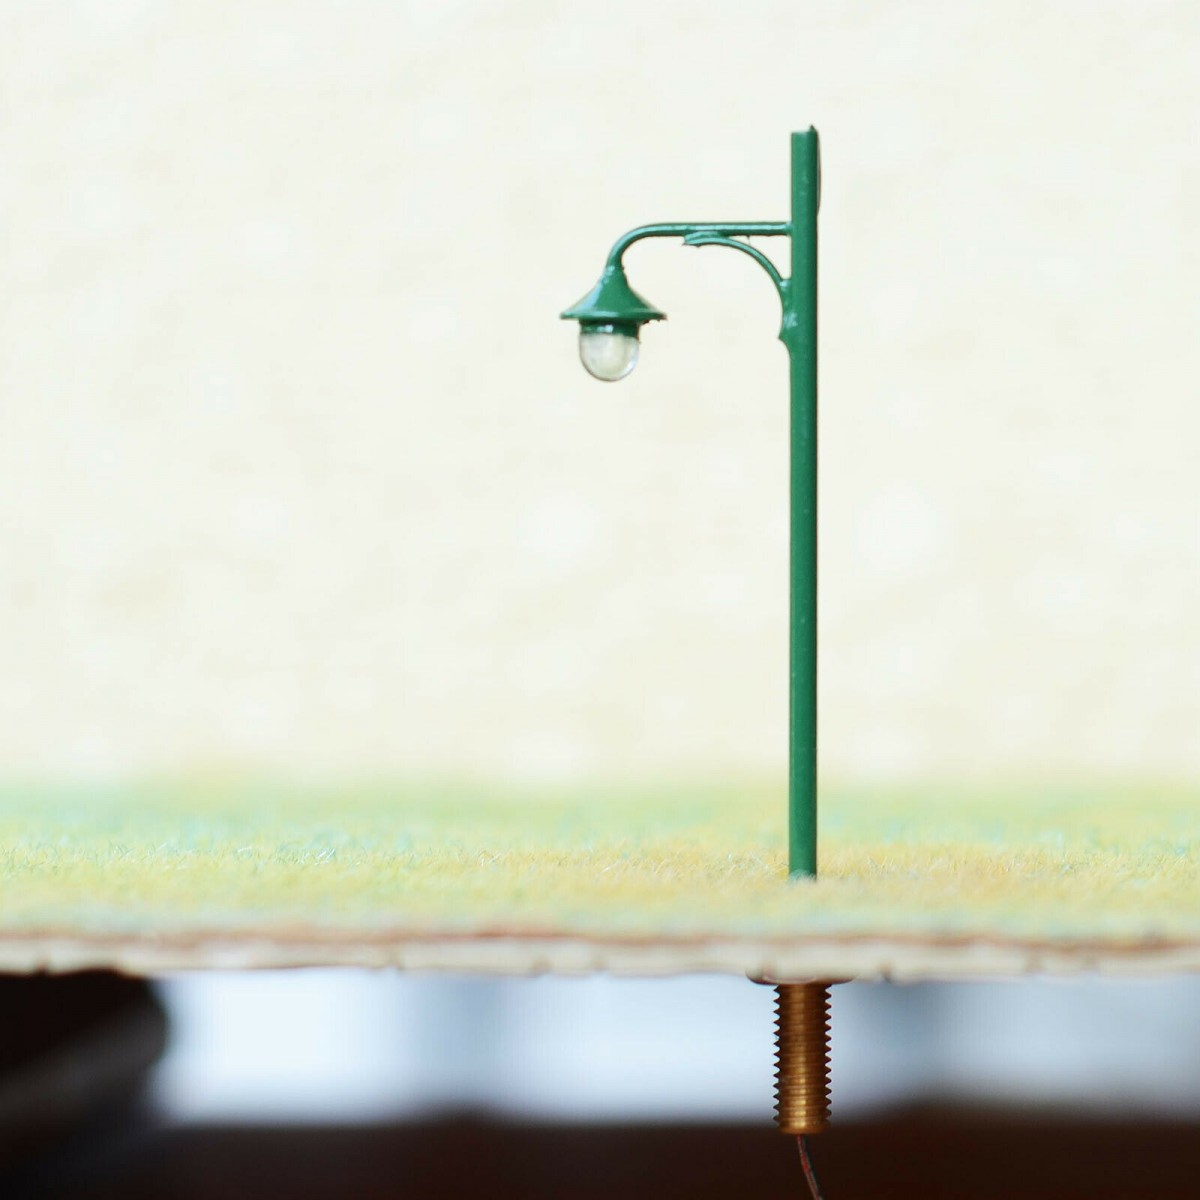 Details about   5 x HO scale model railroad street light LED lamppost station lamp 45mm #S0911BG